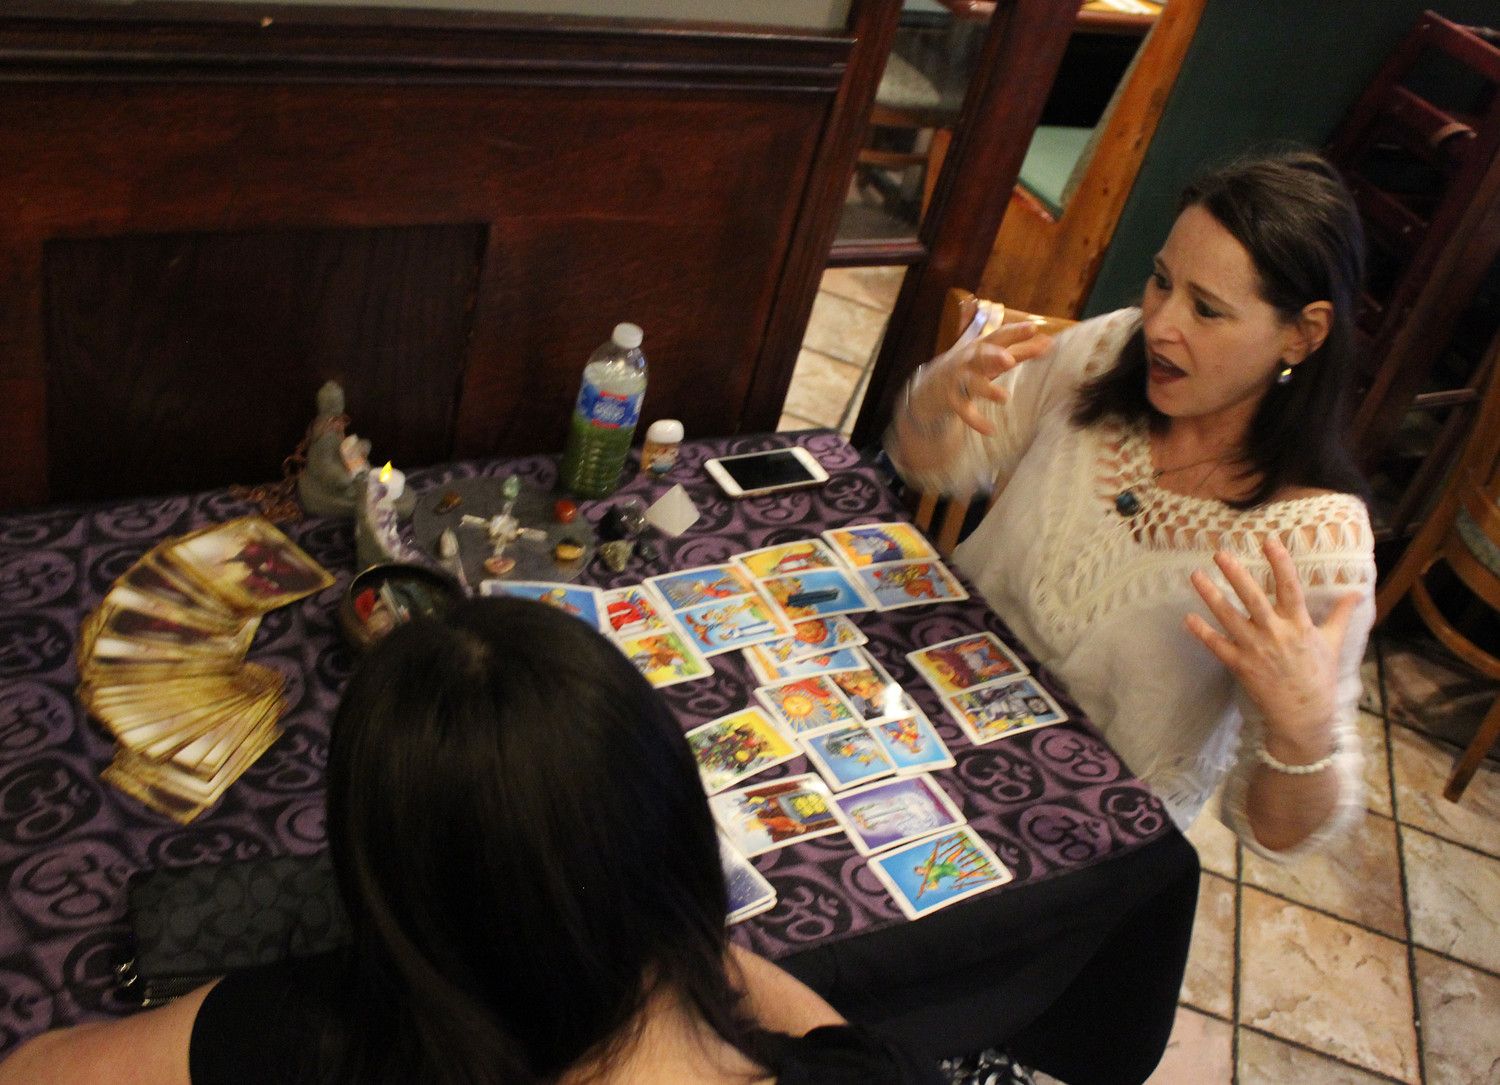 All psychics and mediums work through ESPConnection.com, including tarot card reader Lori Nostramo.